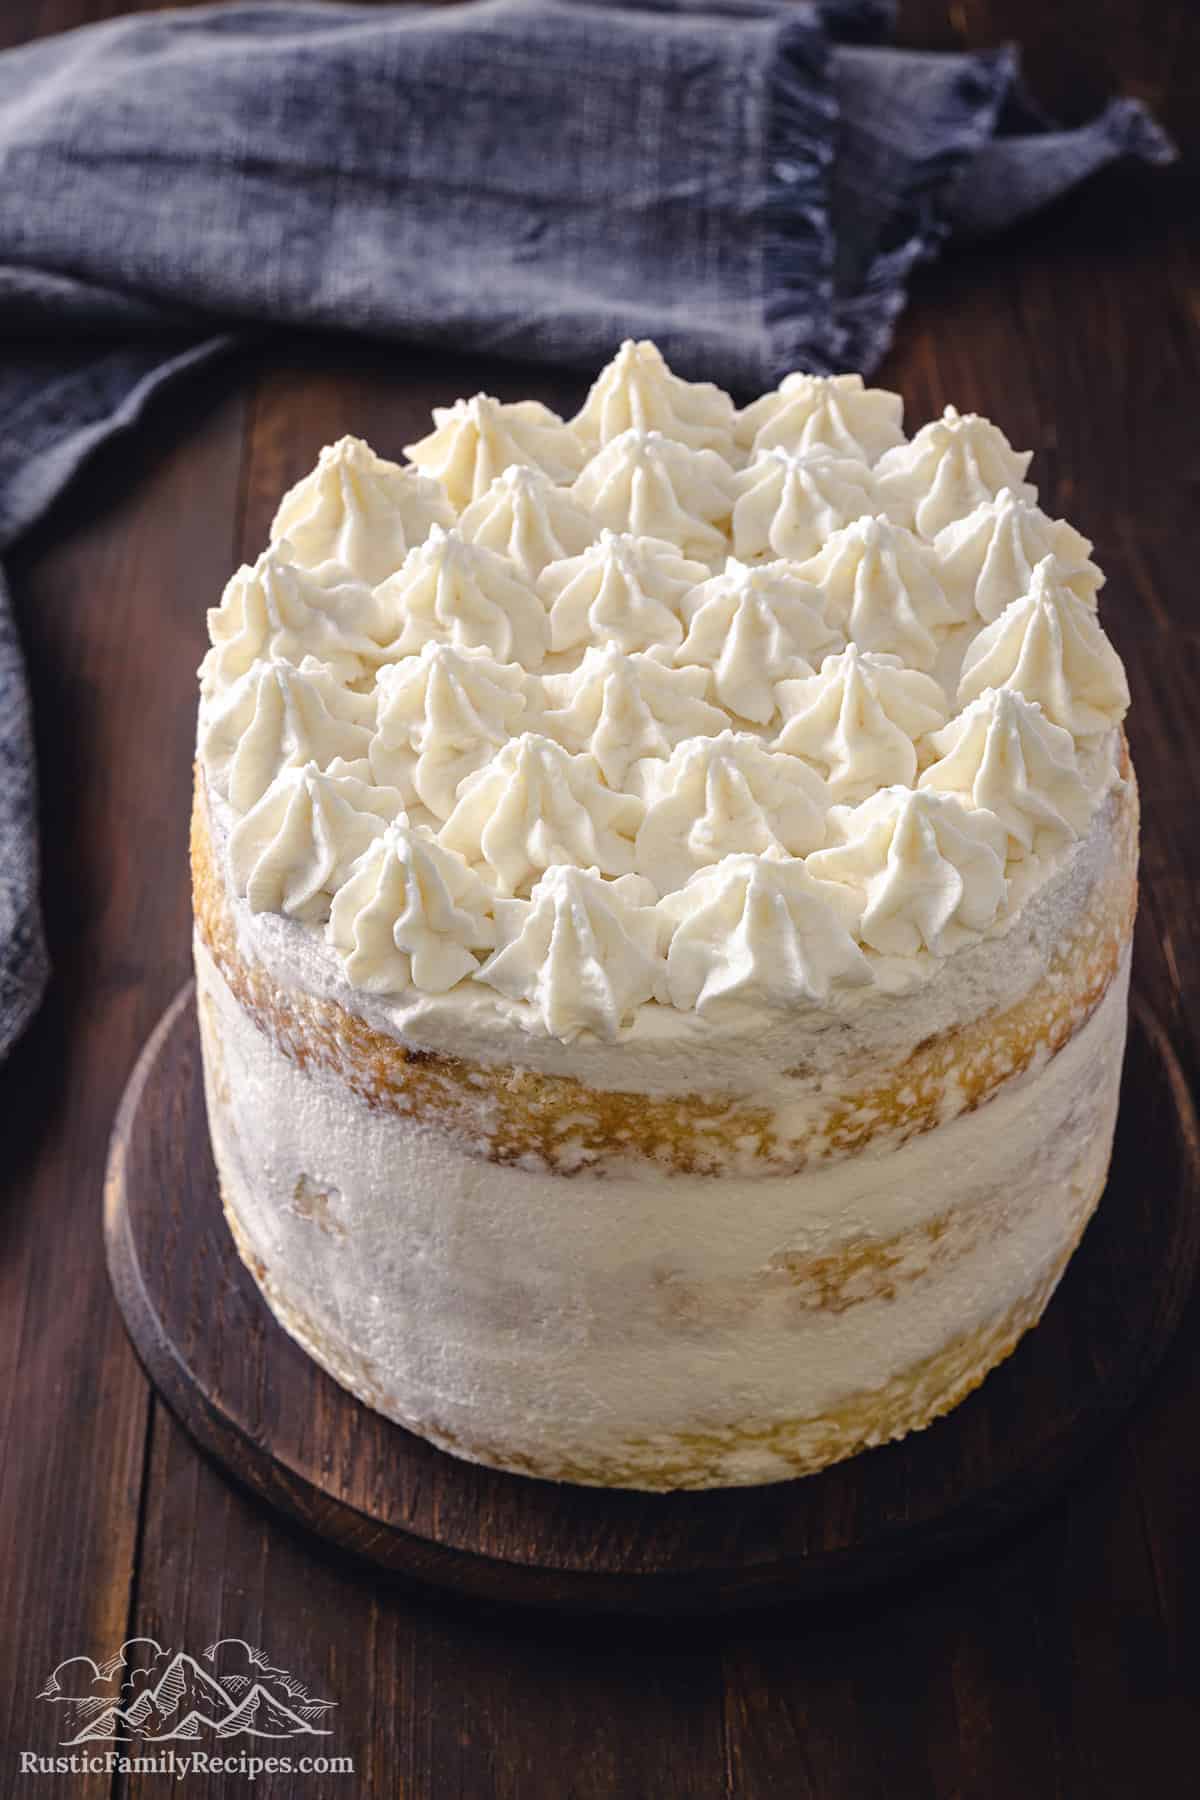 Top of a layered tiramisu cake decorated with mascarpone cream.